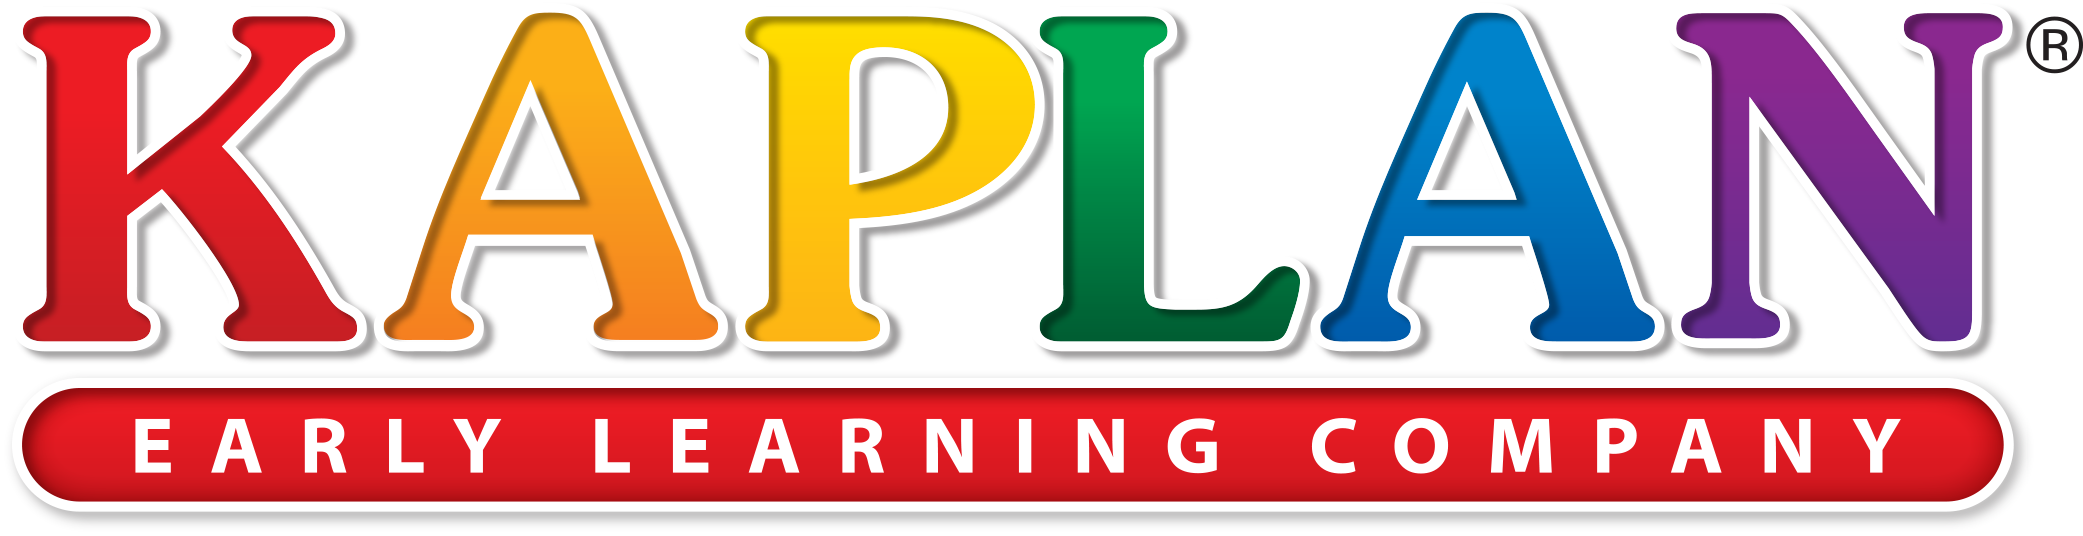 Kaplan eartly learning logo